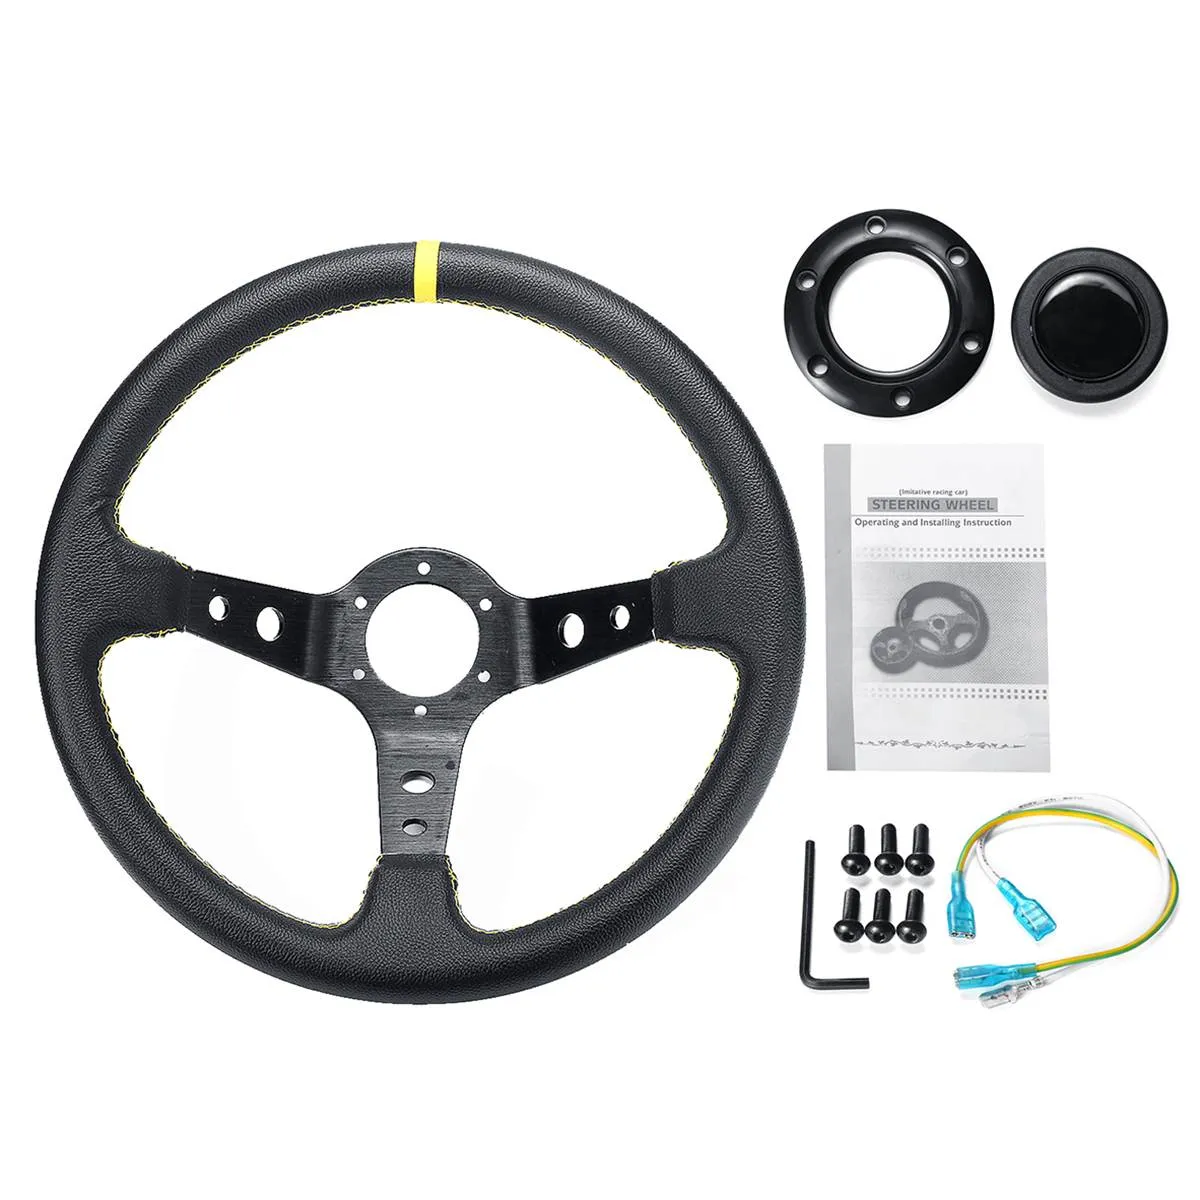 14inch 350mm Deep Dish Drifting Steering Wheel Universal Leather Aluminum Car Auto Racing Sport Steering Wheel Accessories